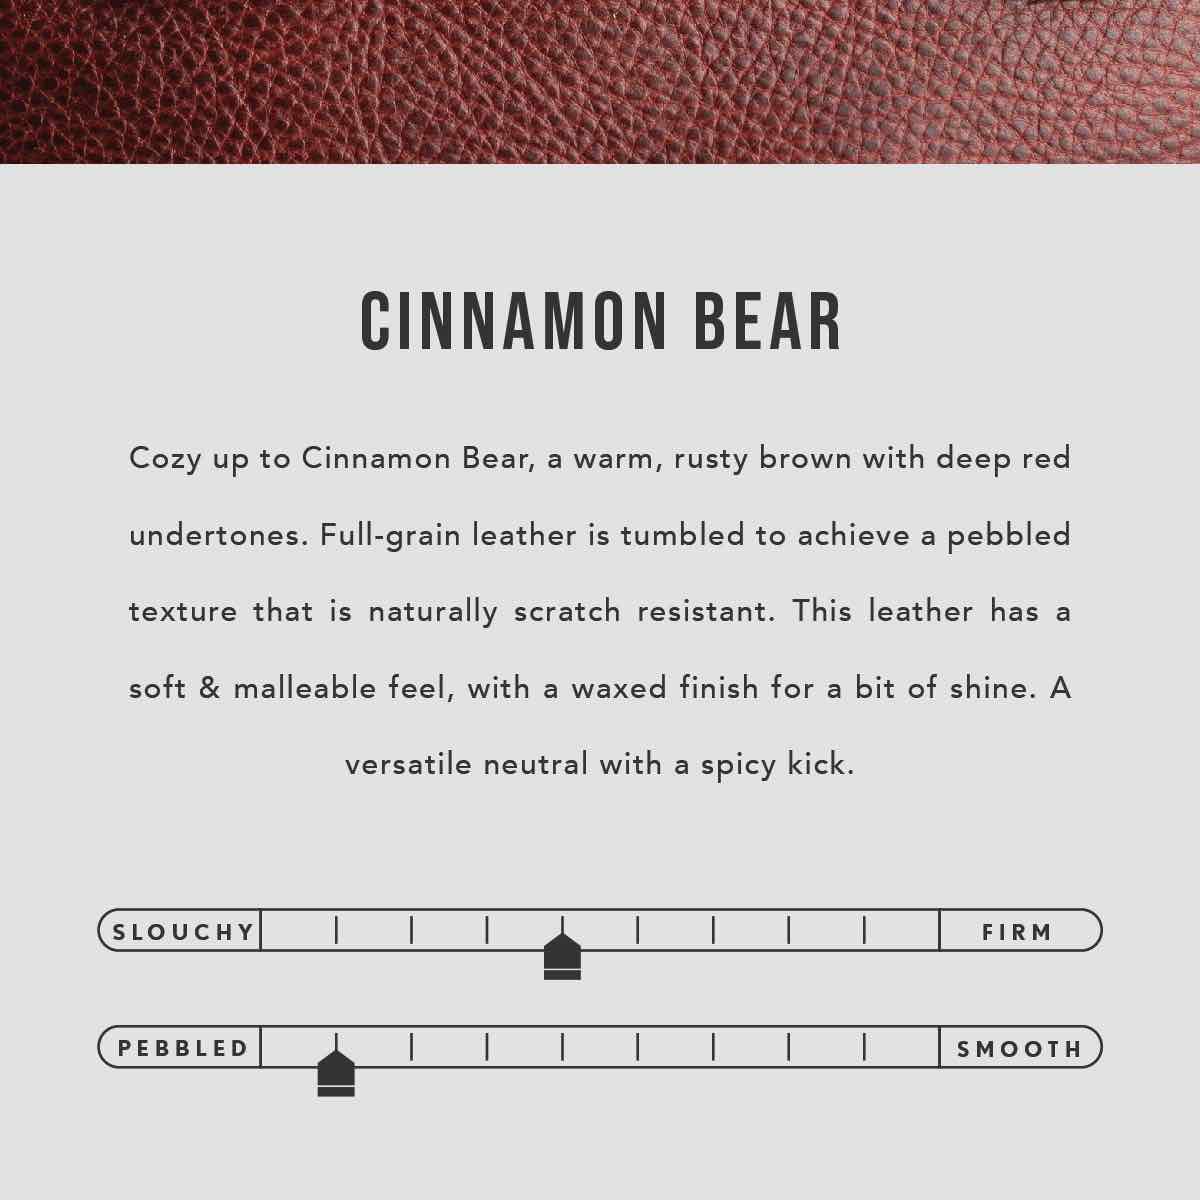 Cinnamon Bear*Classic | infographic